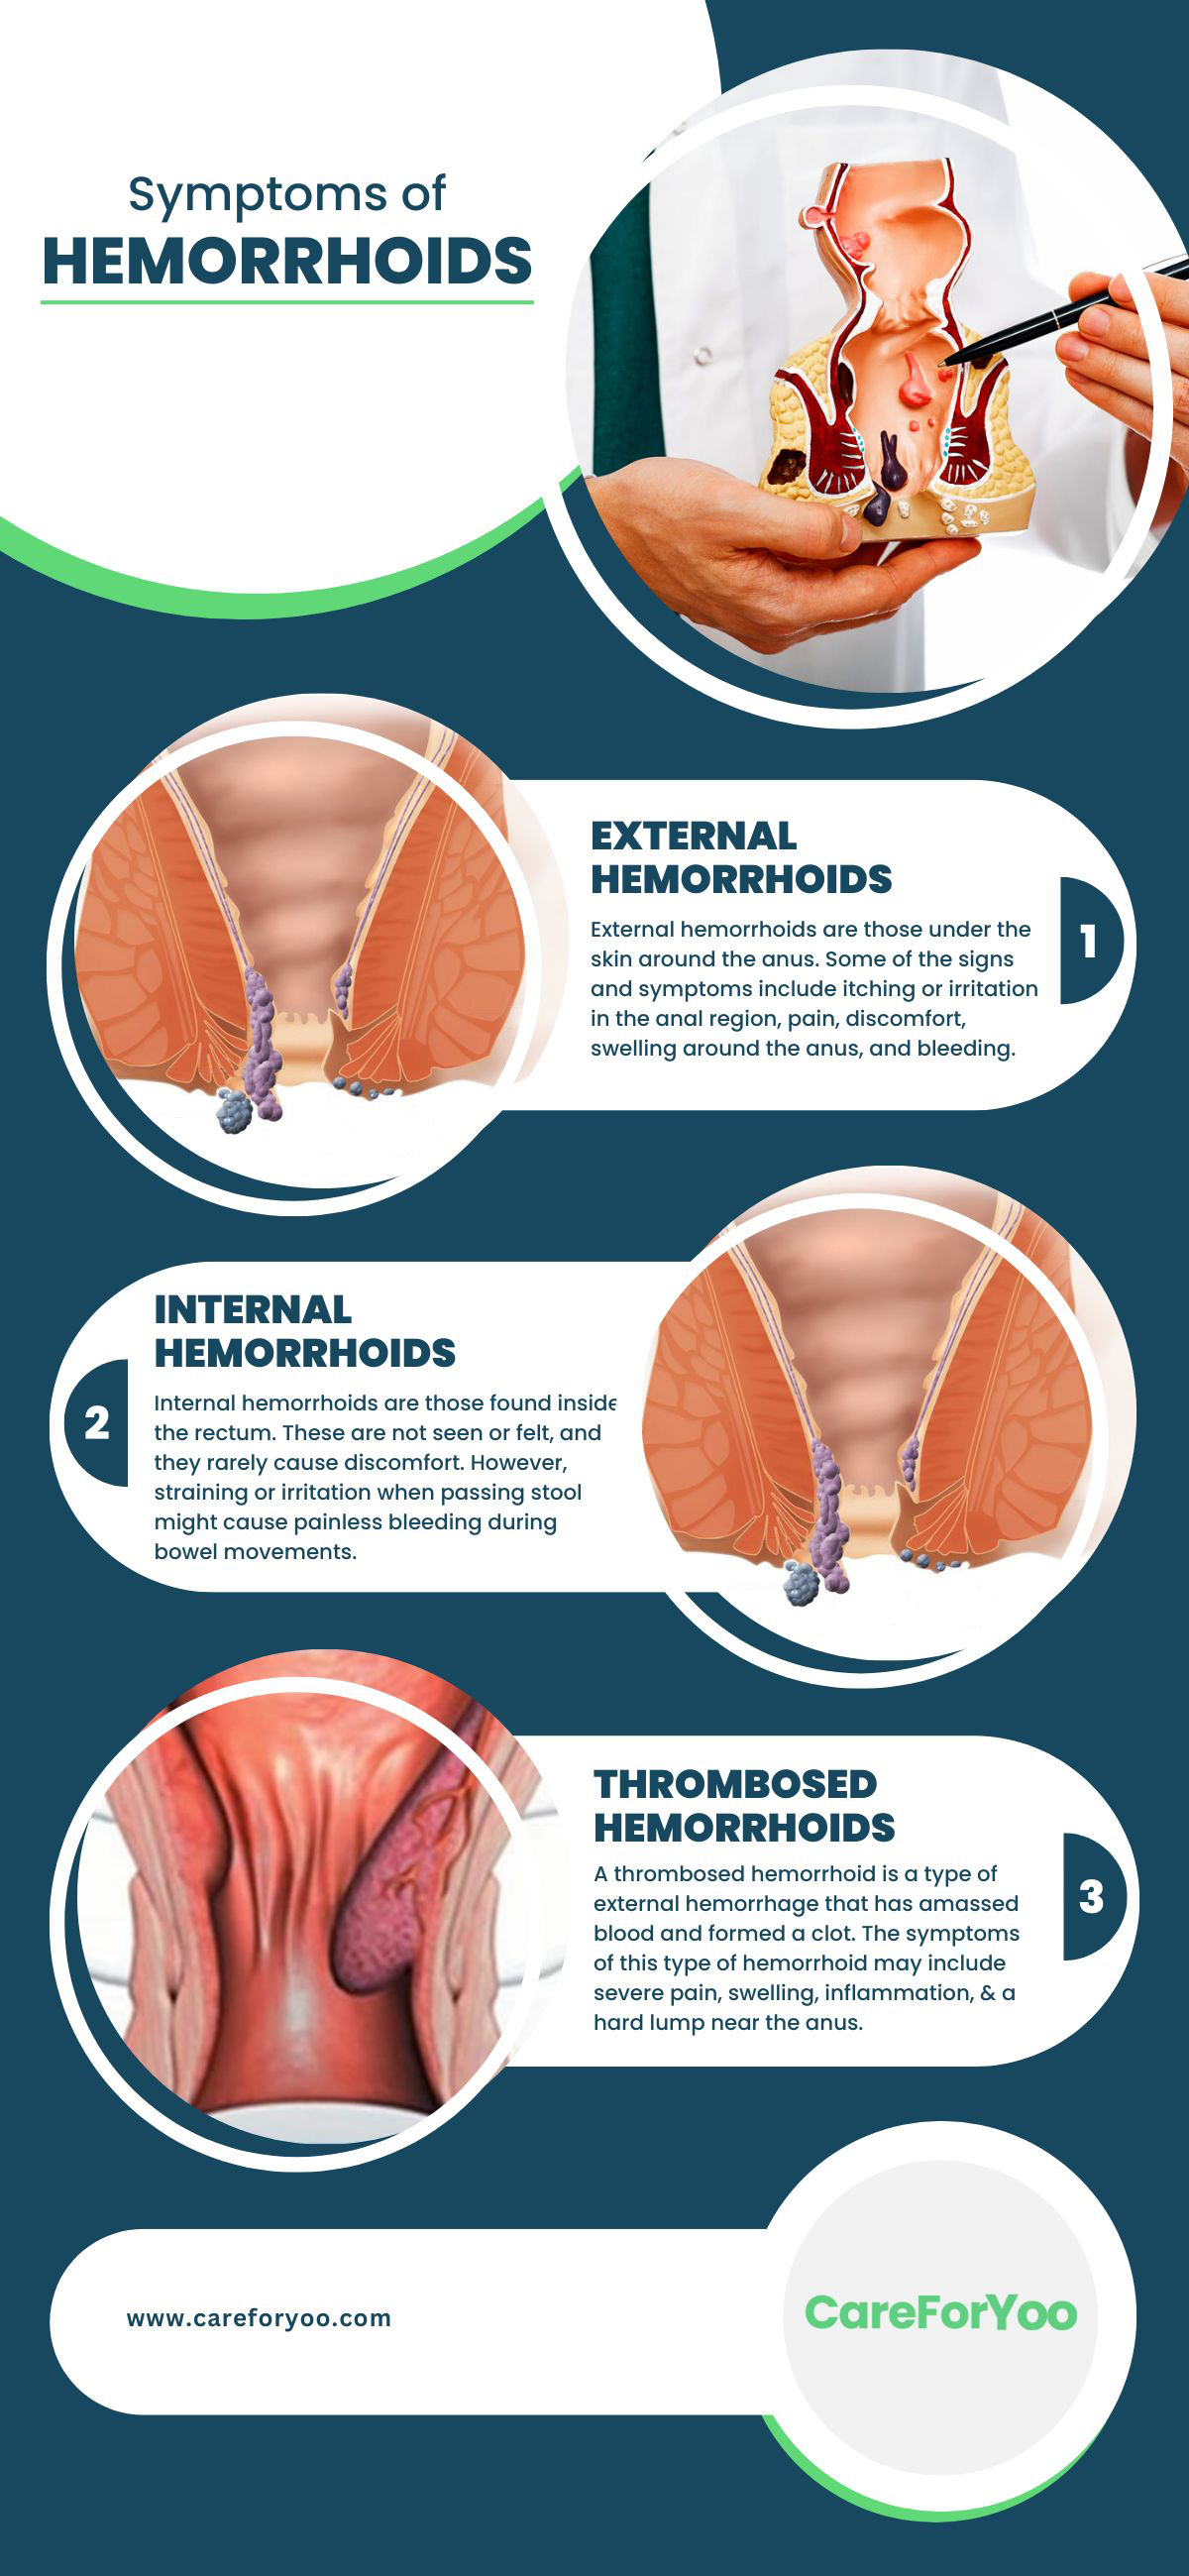 Symptoms of Hemorrhoids